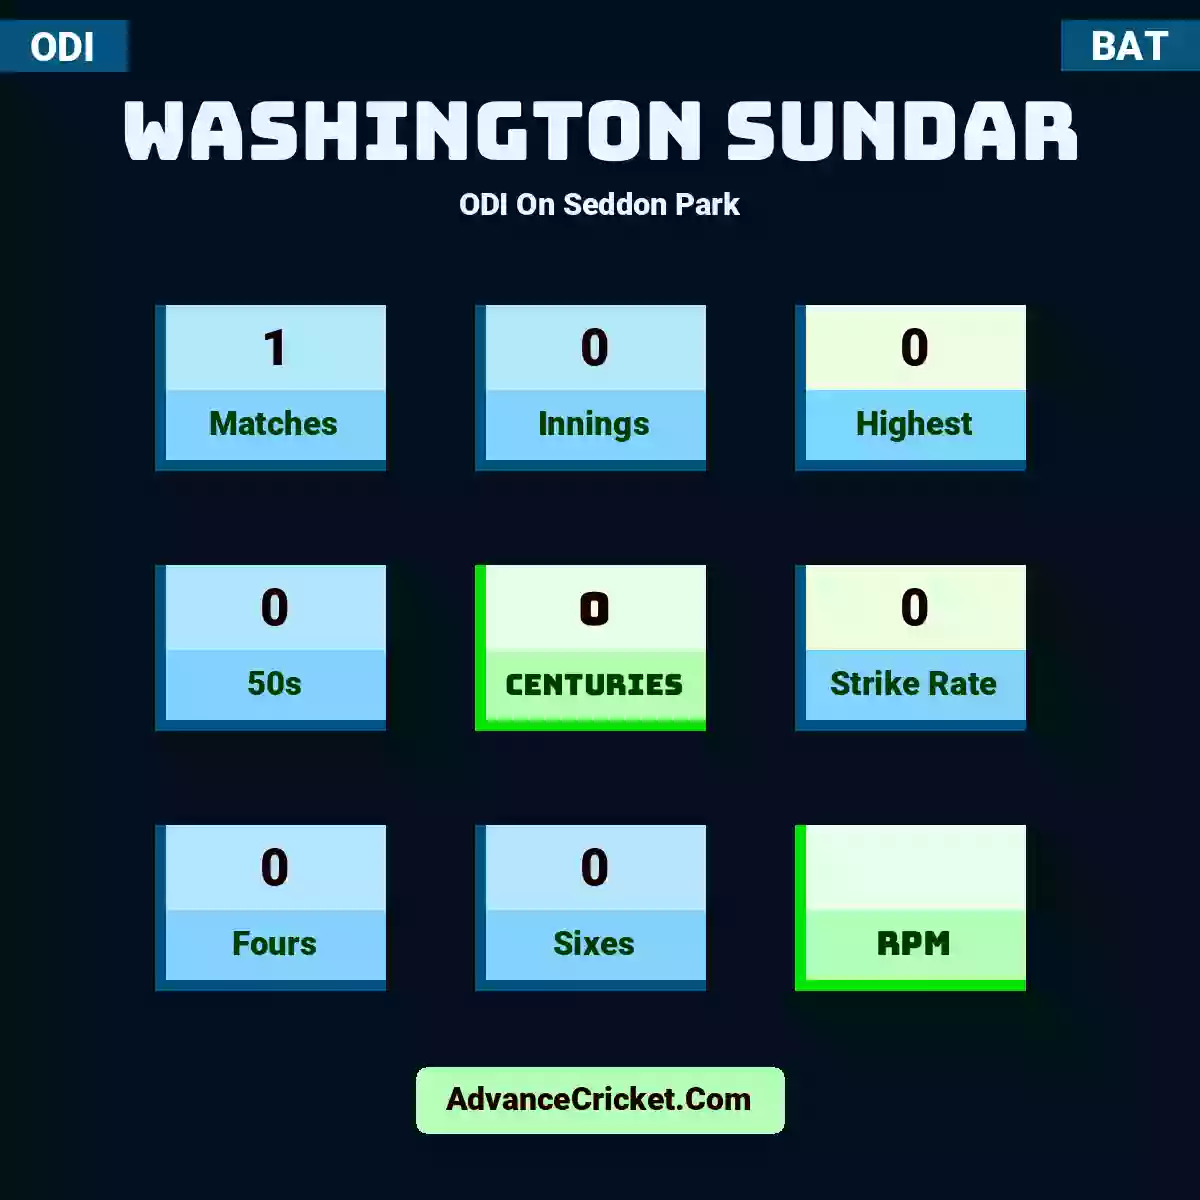 Washington Sundar ODI  On Seddon Park, Washington Sundar played 1 matches, scored 0 runs as highest, 0 half-centuries, and 0 centuries, with a strike rate of 0. W.Sundar hit 0 fours and 0 sixes.